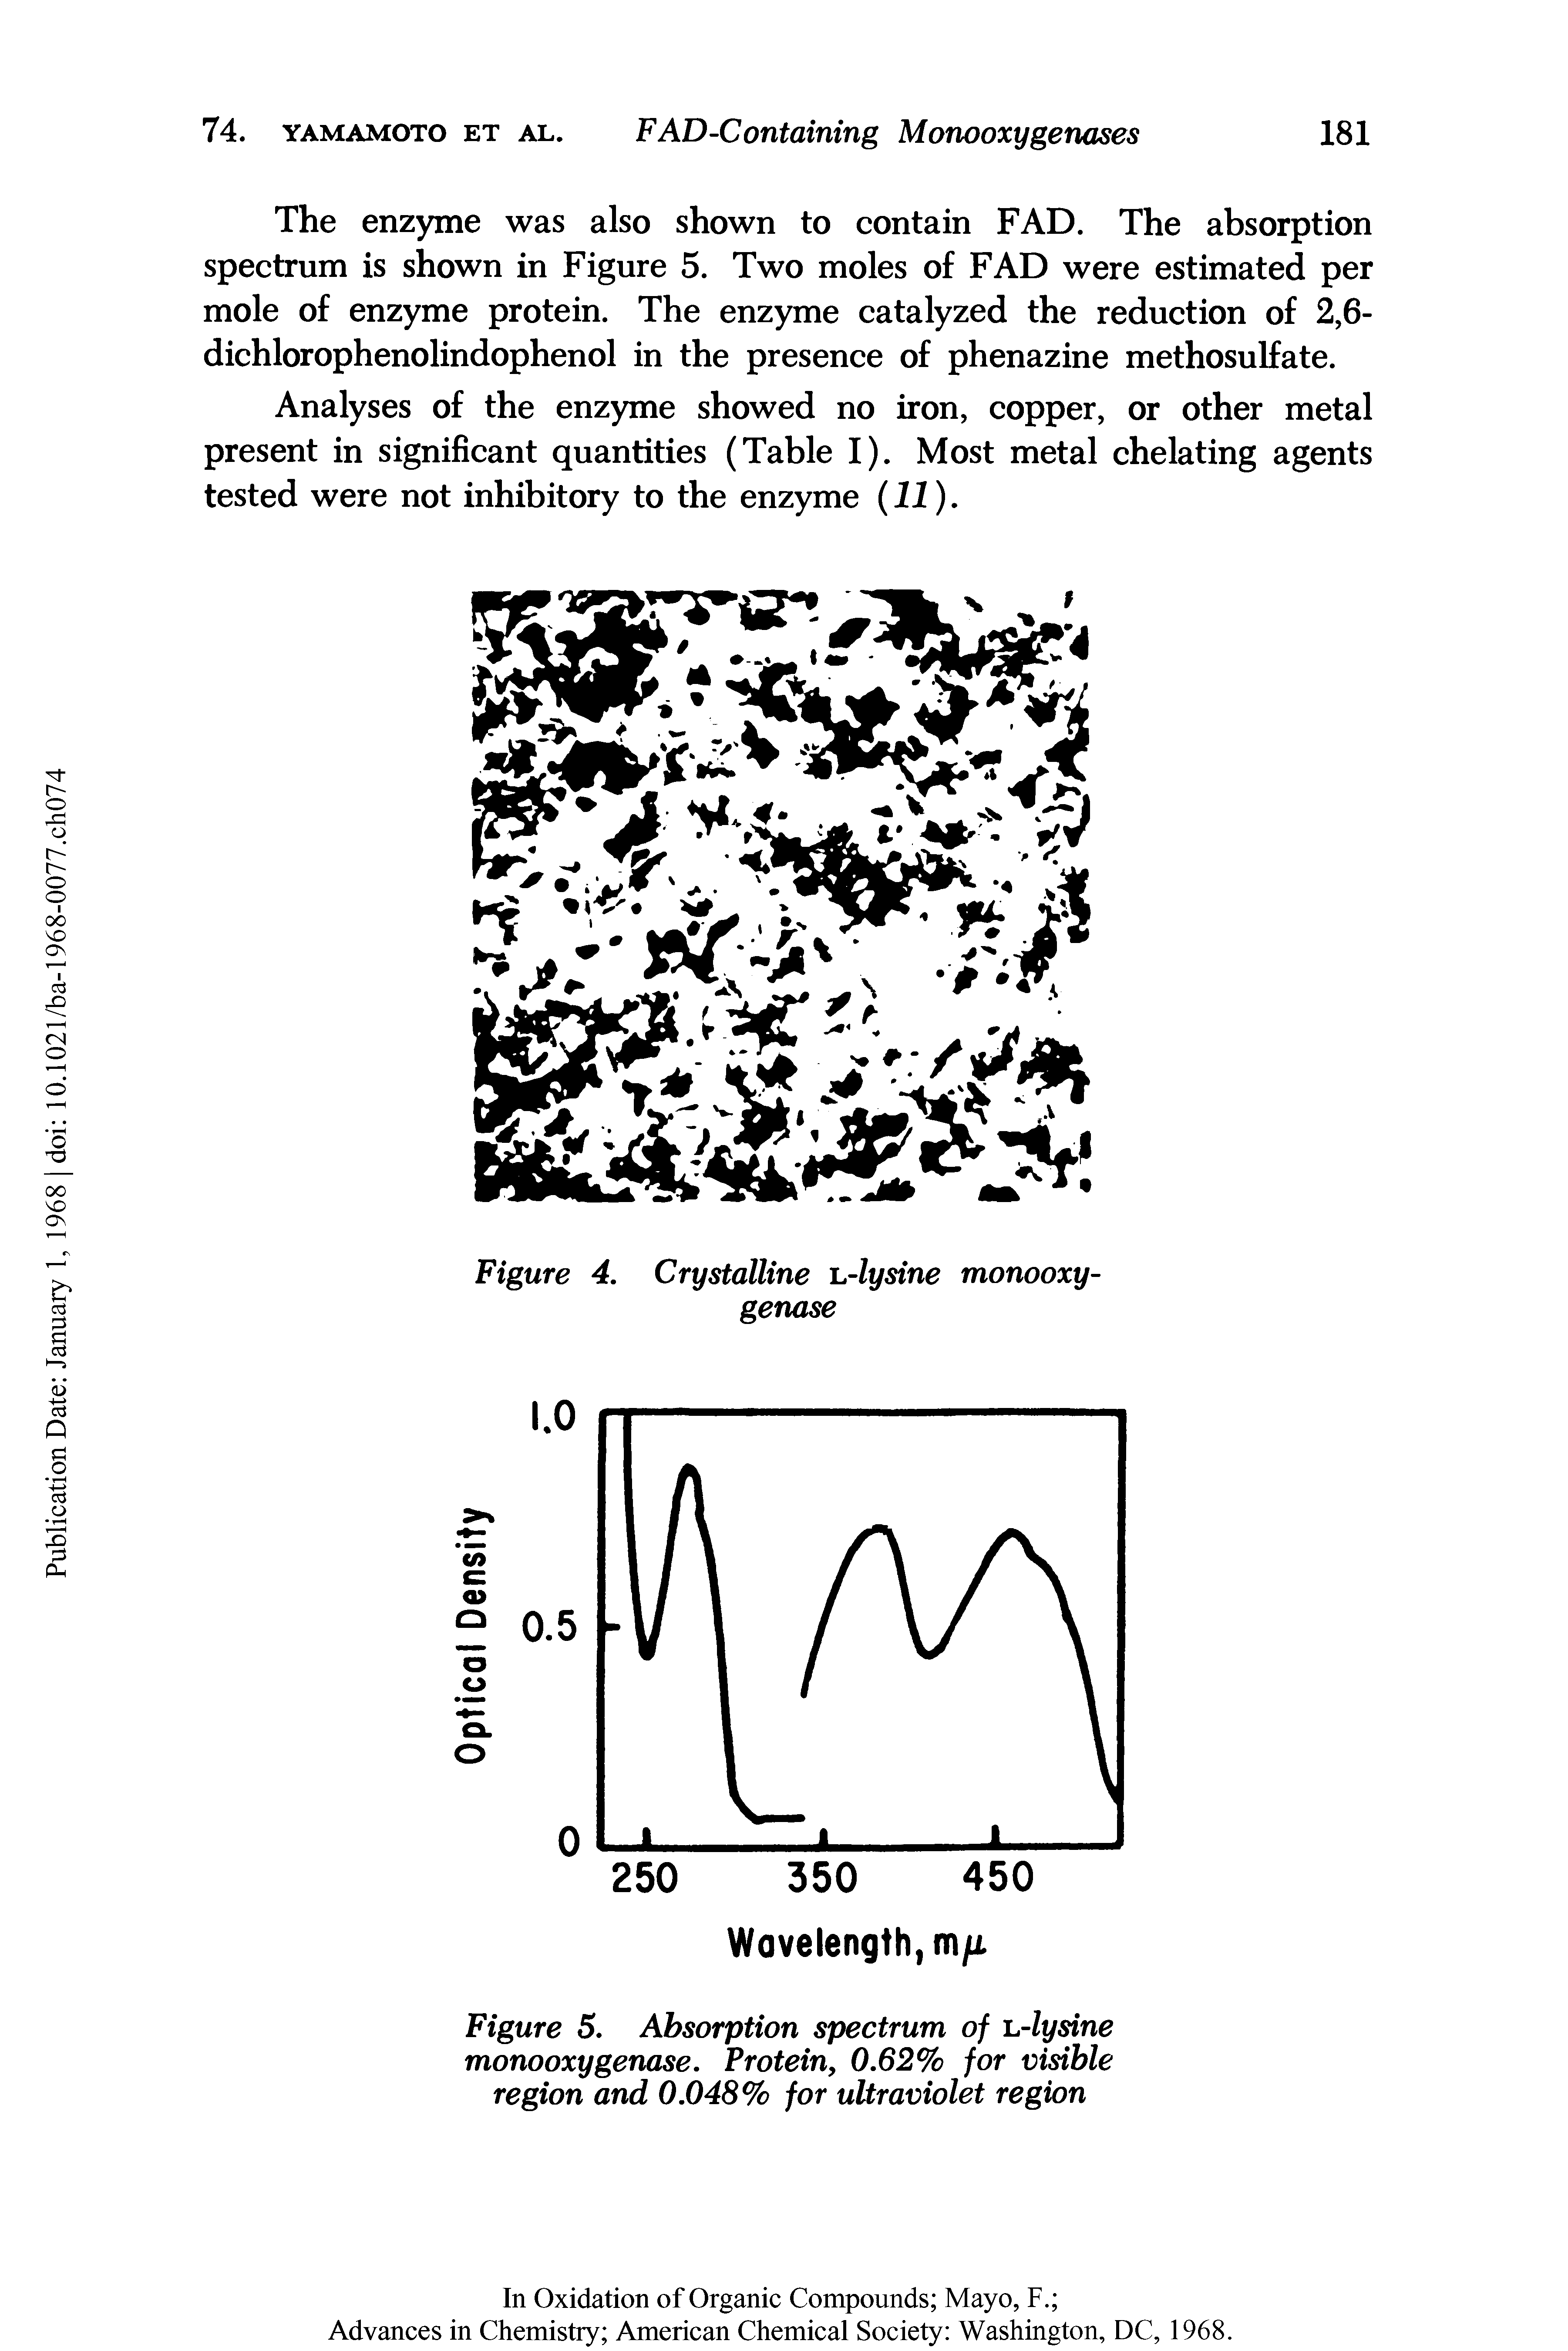 Figure 5. Absorption spectrum of L-lysine monooxygenase. Protein, 0.62% for visible region and 0.048% for ultraviolet region...